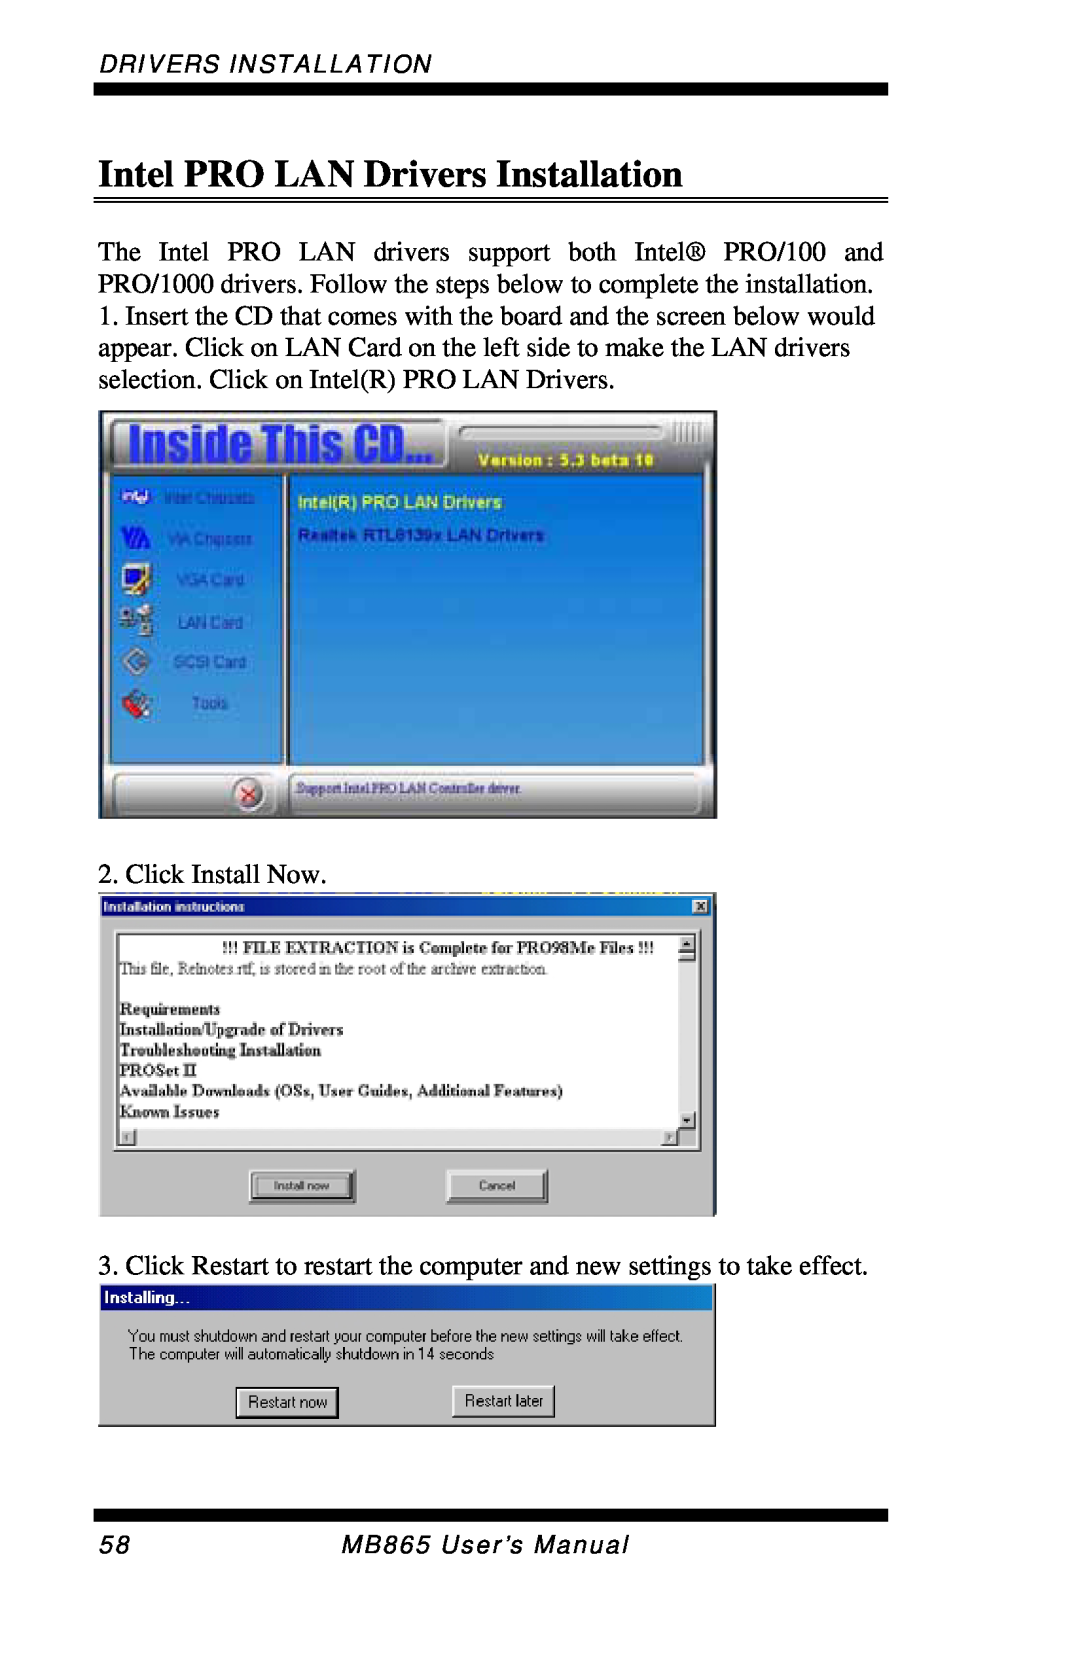 Intel MB865 user manual Intel PRO LAN Drivers Installation 